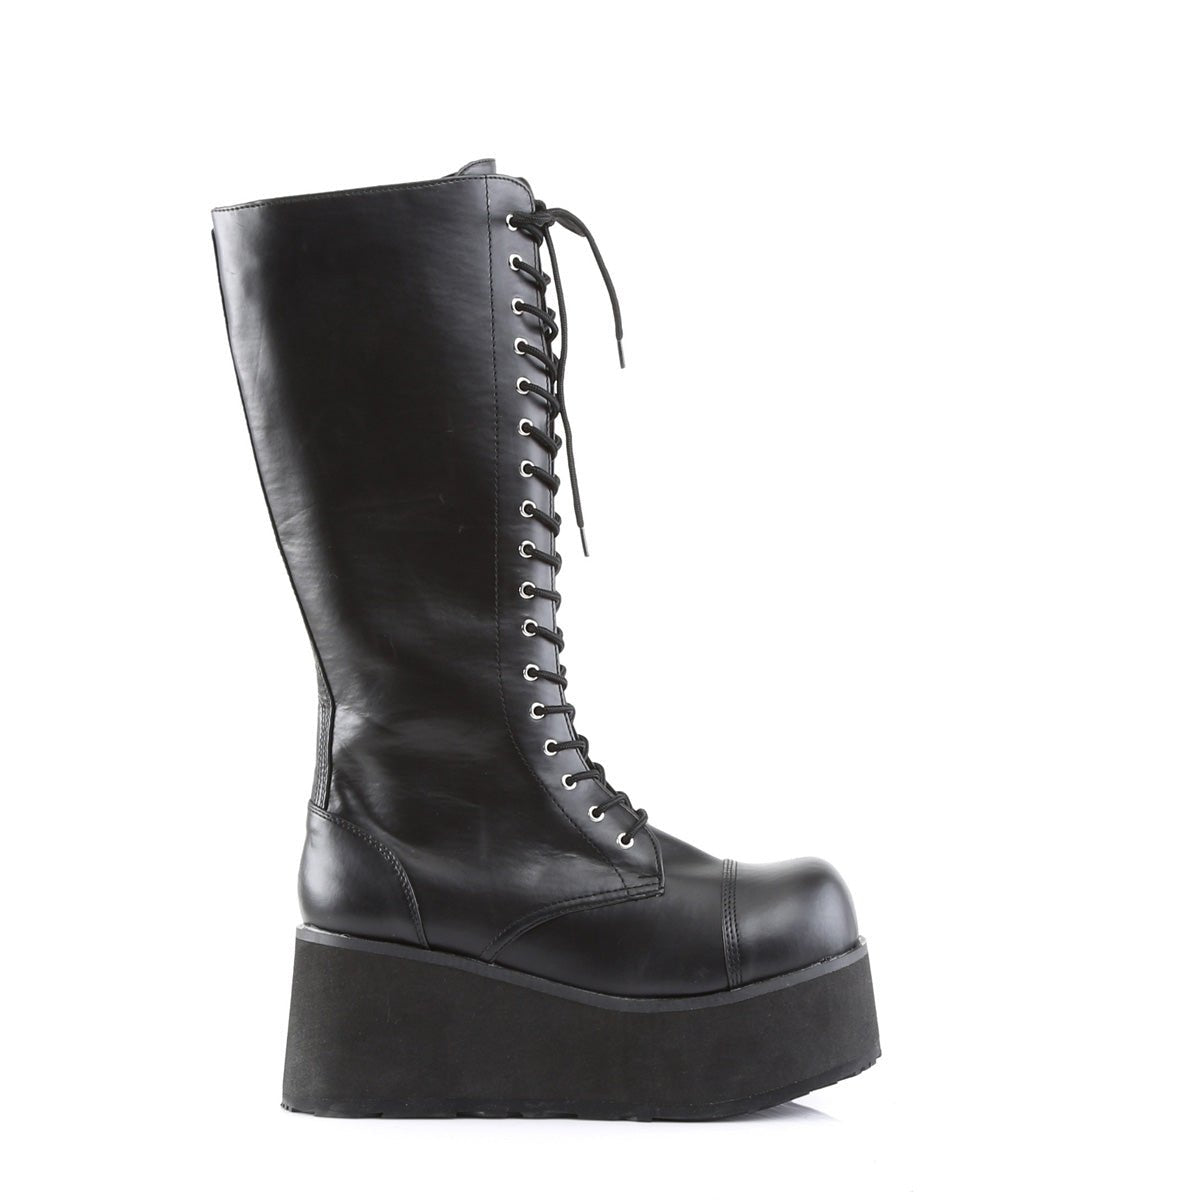 Too Fast | Demonia Trashville 502 | Black Vegan Leather Unisex Platform Boots